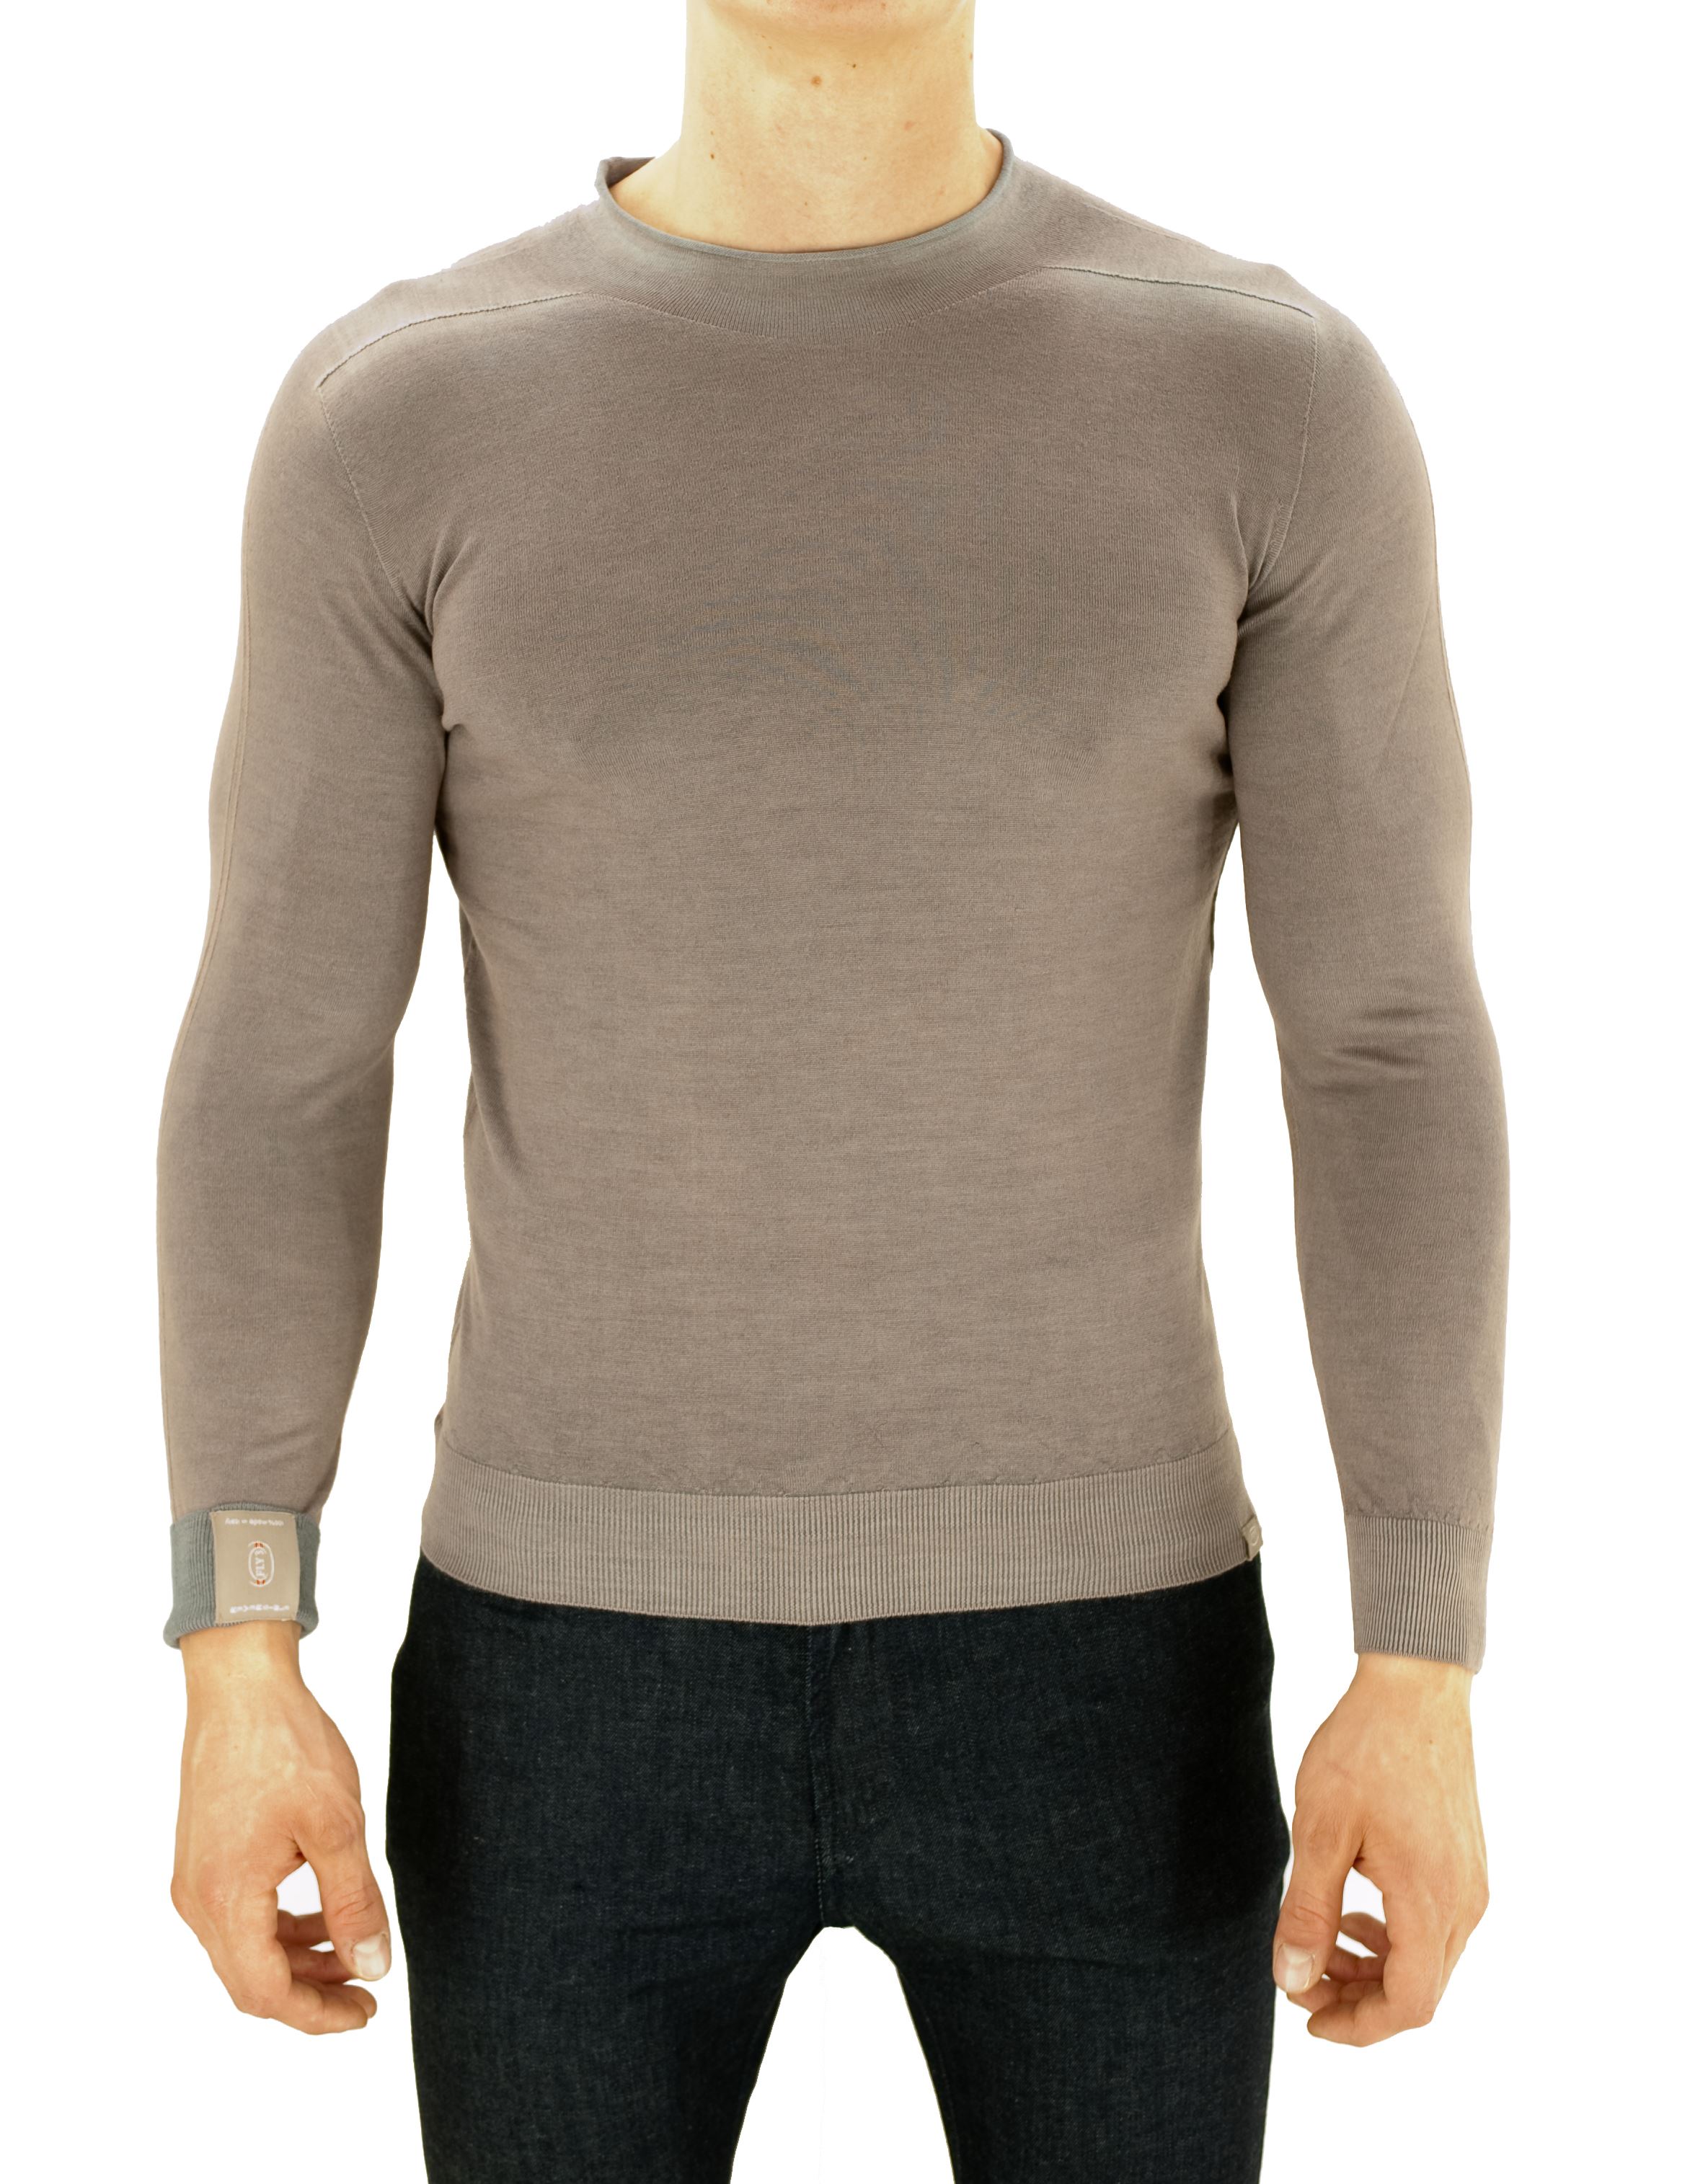 Picture of Merino round neck reversible sweater